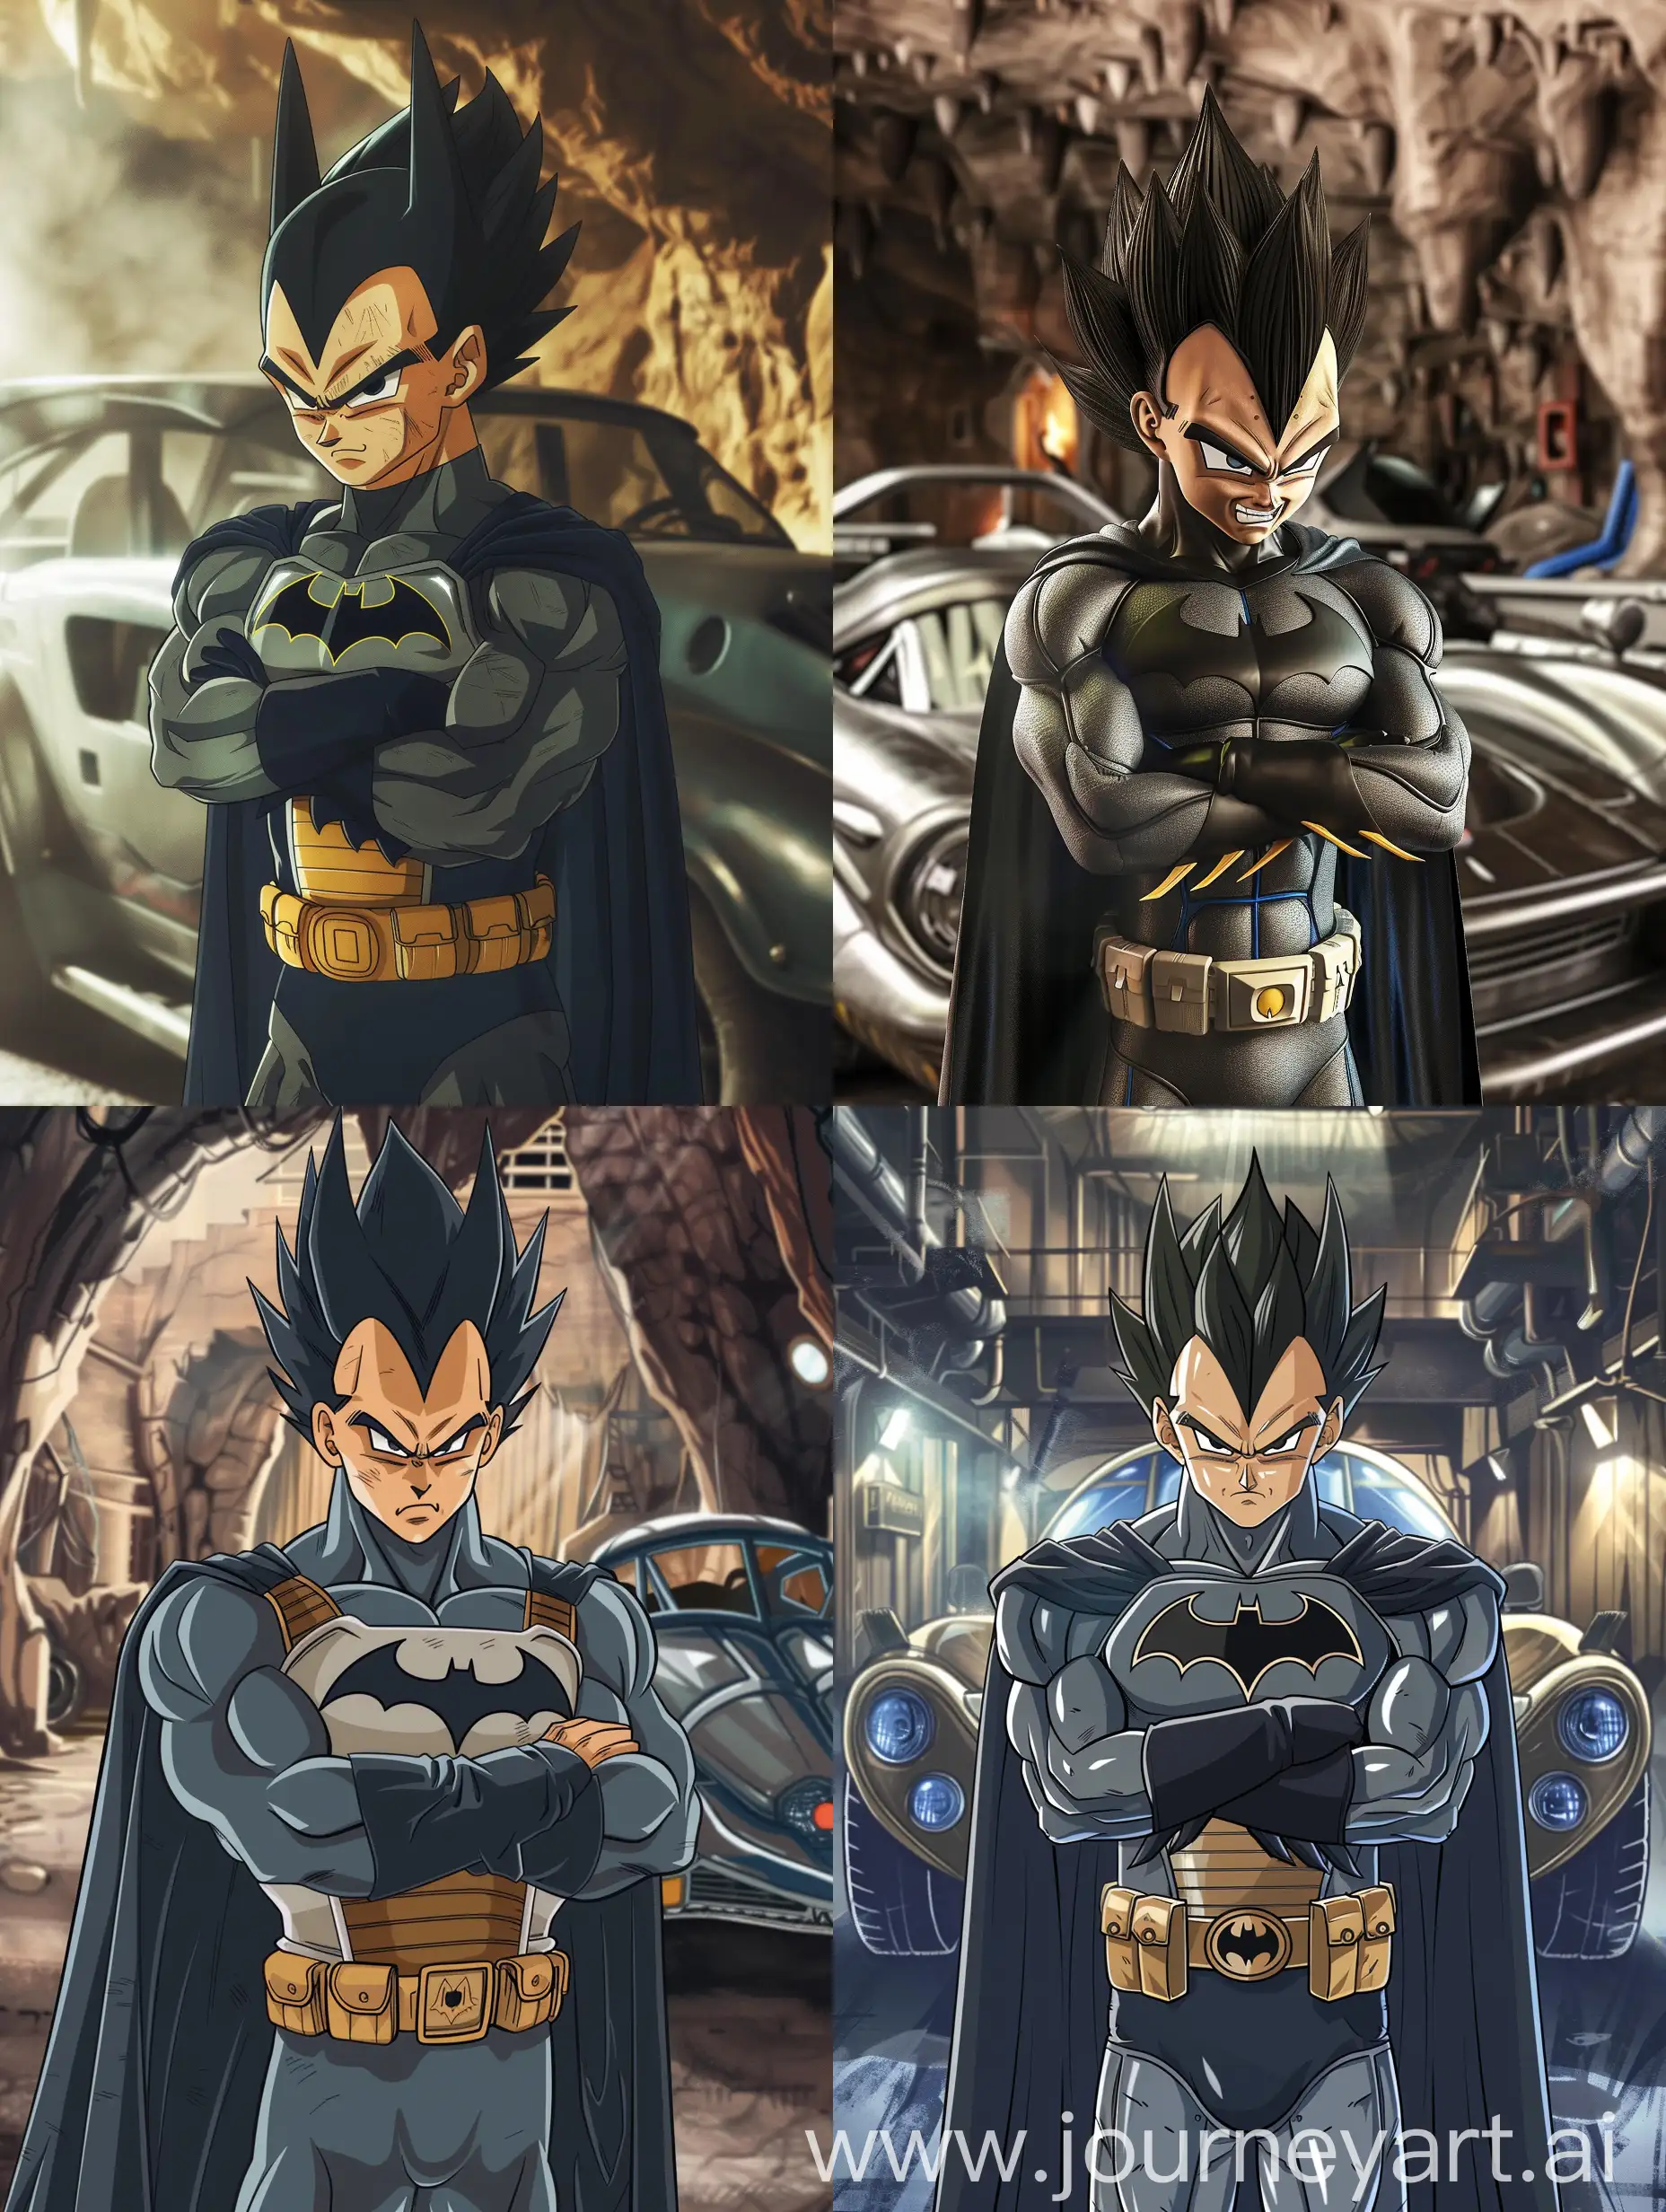 Vegeta-in-Batman-Suit-Stands-Defiantly-in-Batcave